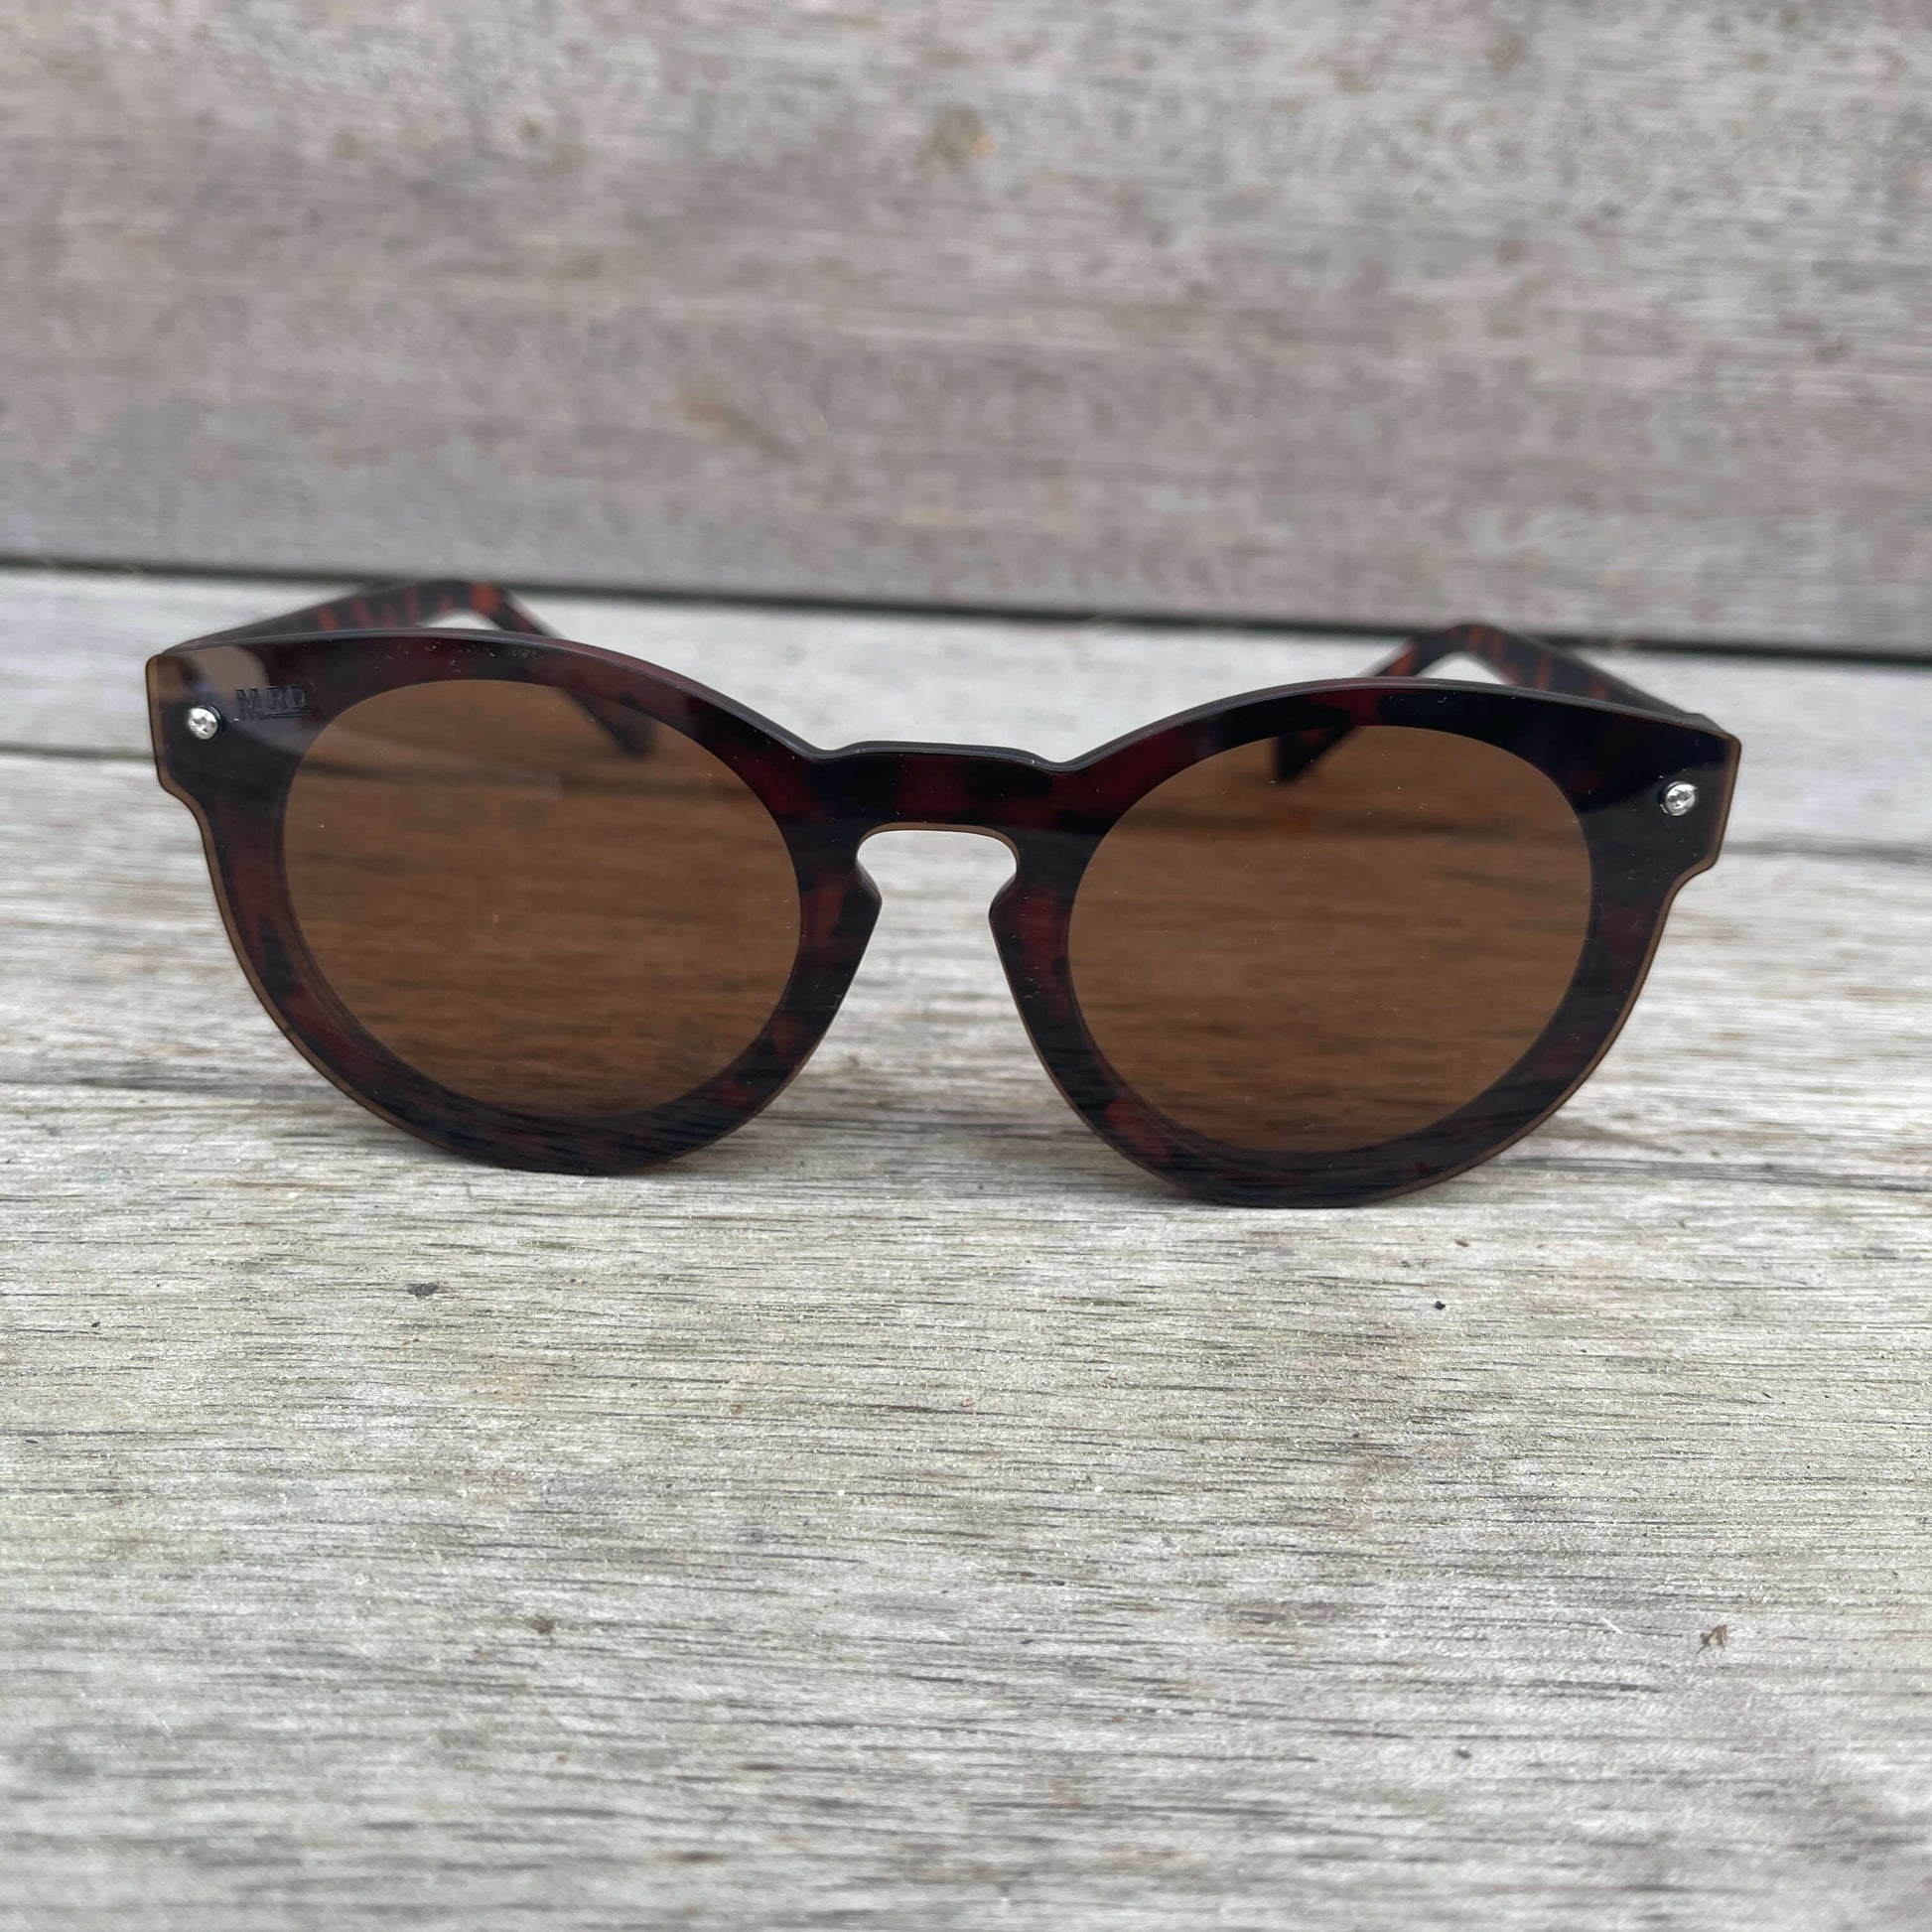 Womens sunglasses with tortoiseshell frames.